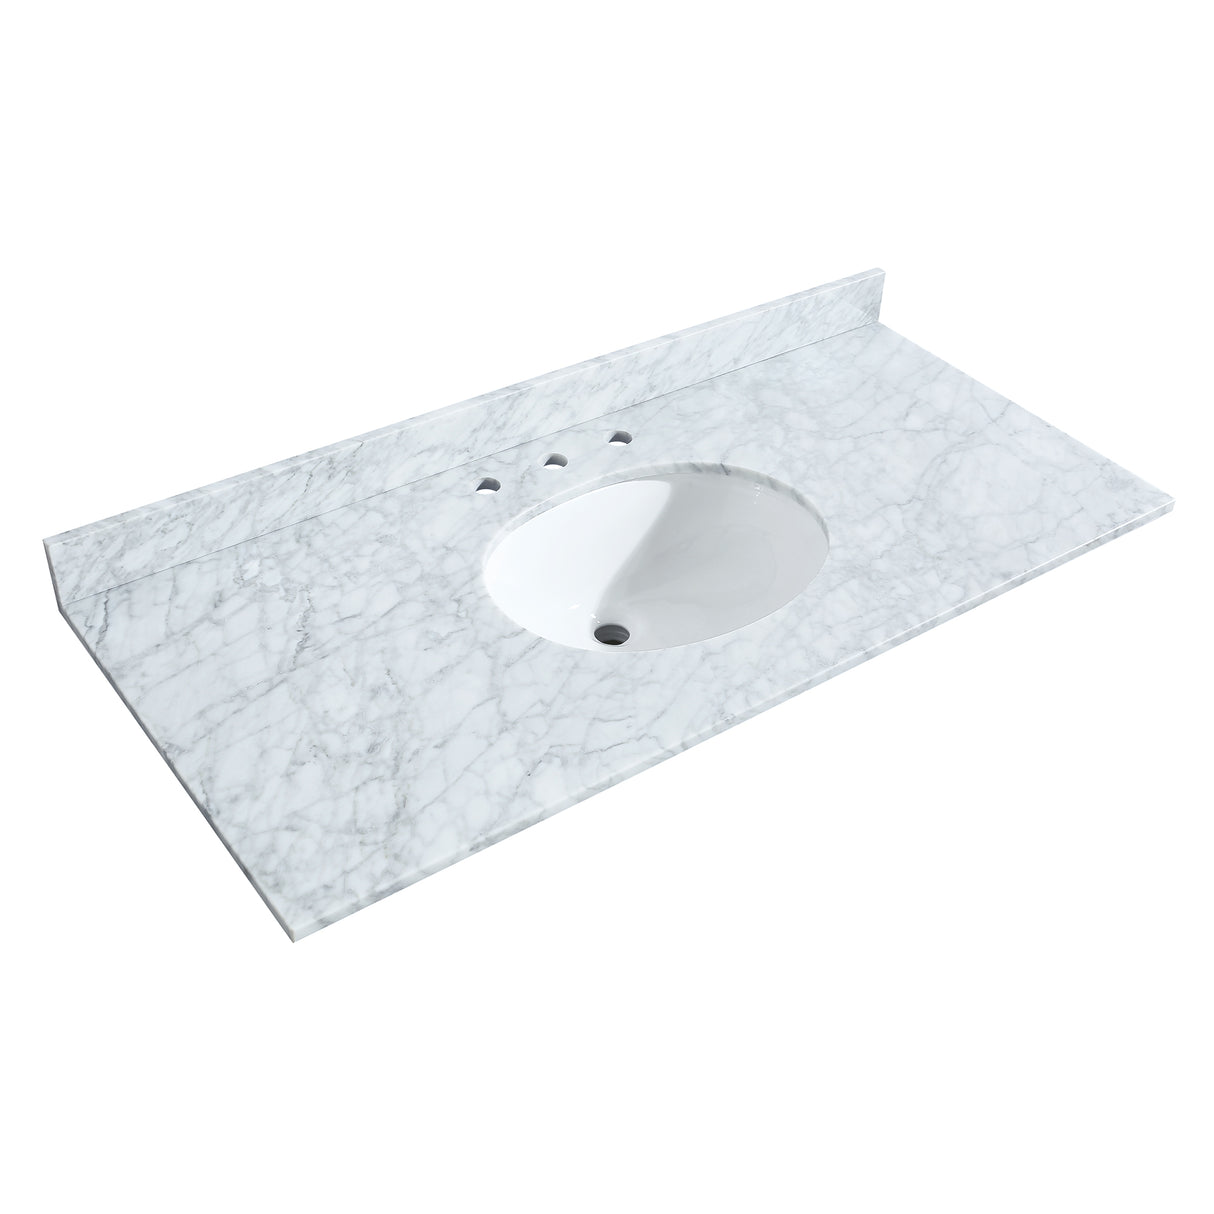 Deborah 48 Inch Single Bathroom Vanity in White White Carrara Marble Countertop Undermount Oval Sink Brushed Gold Trim No Mirror